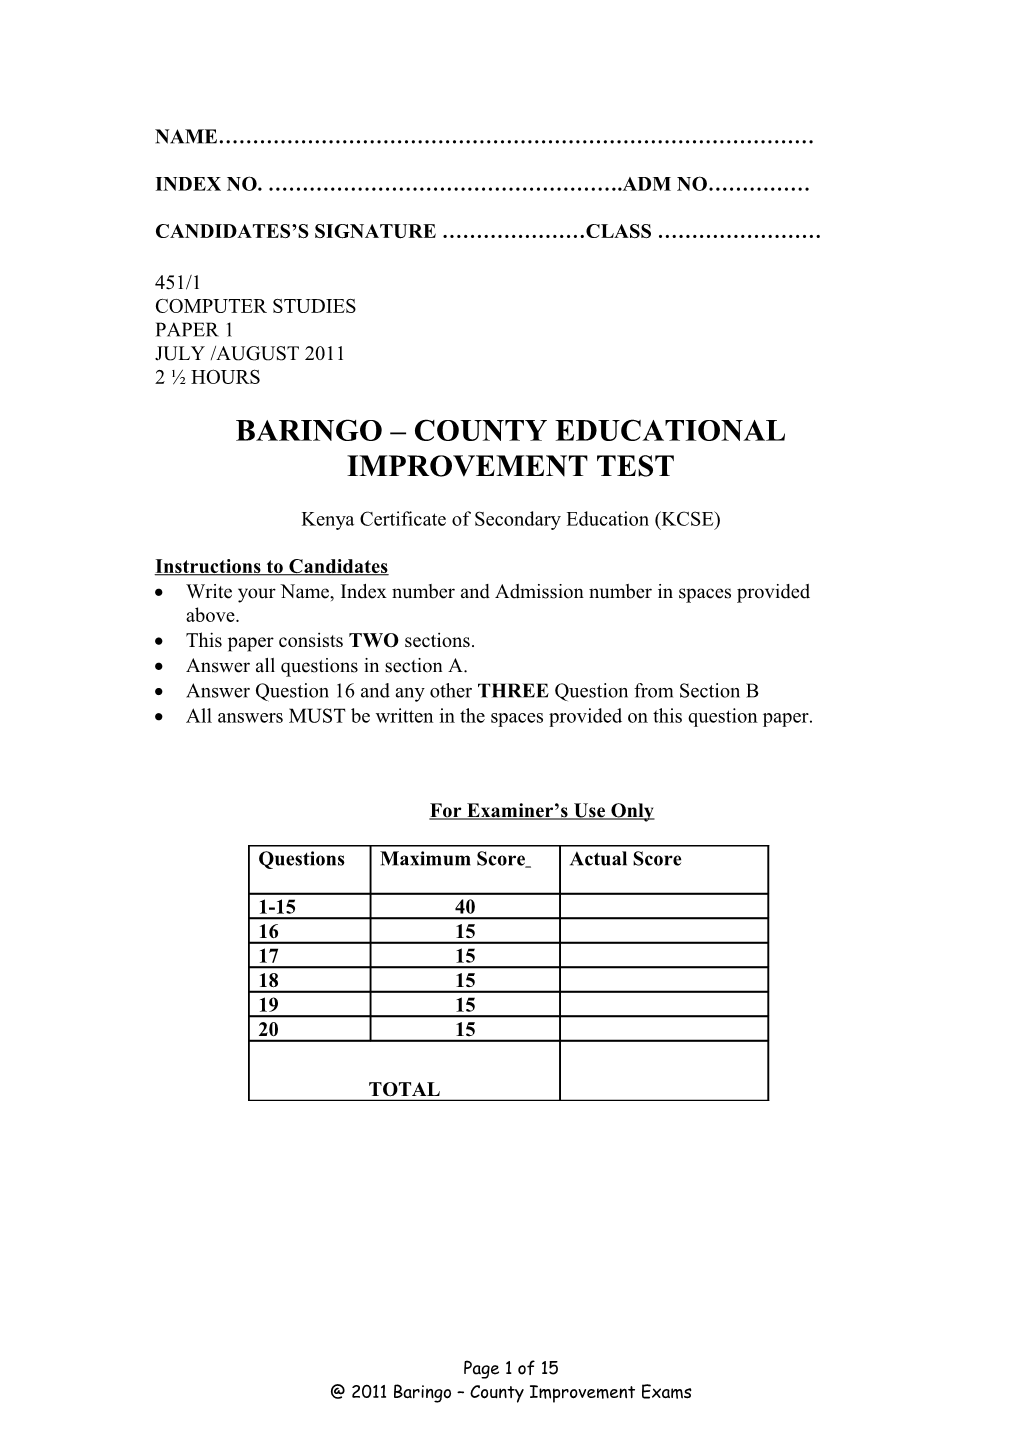 Baringo County Educational Improvement Test